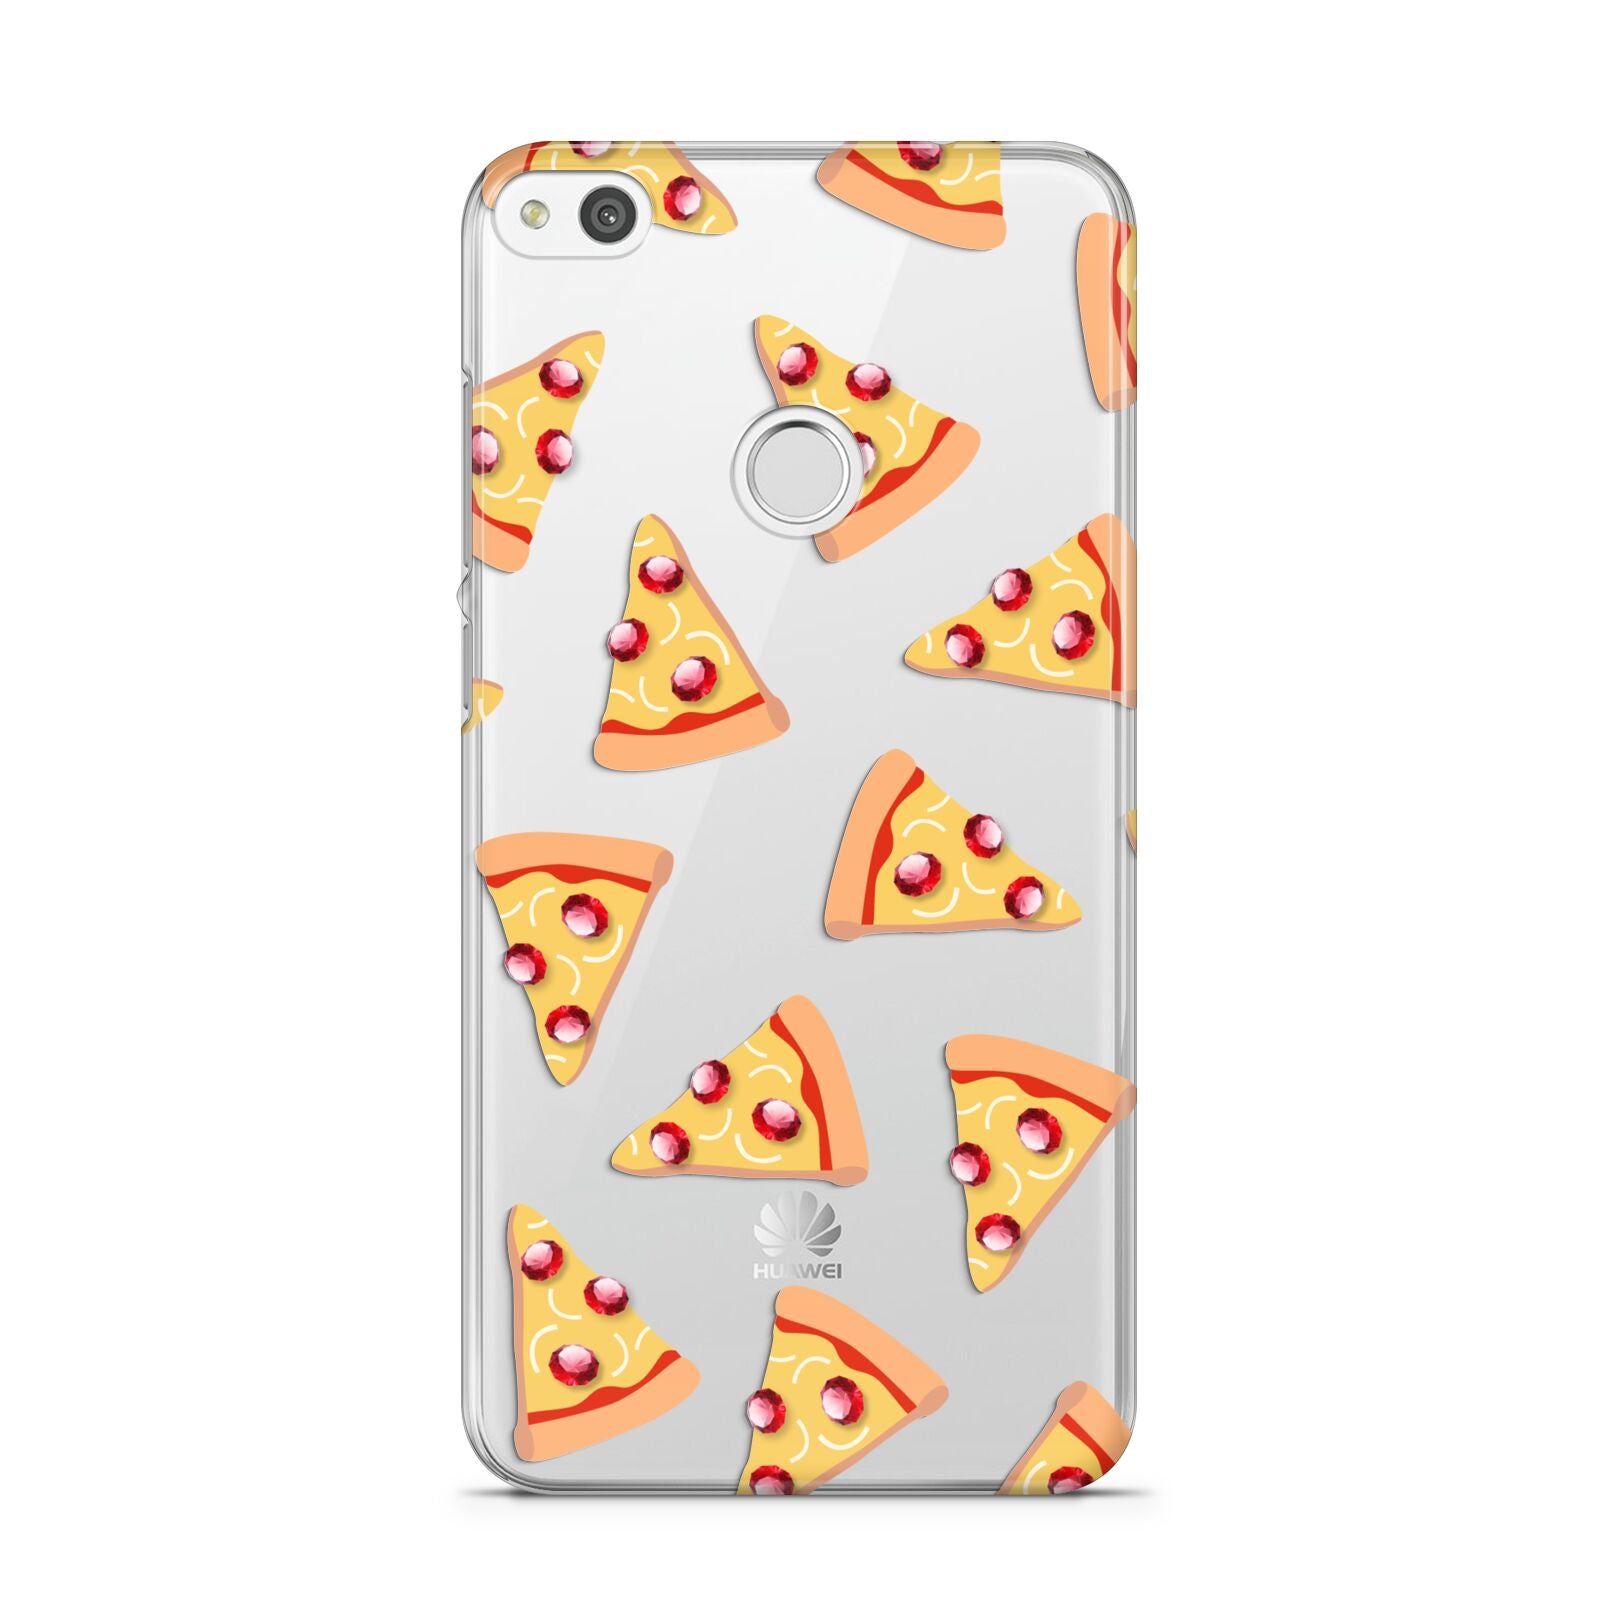 Rubies on Cartoon Pizza Slices Huawei P8 Lite Case